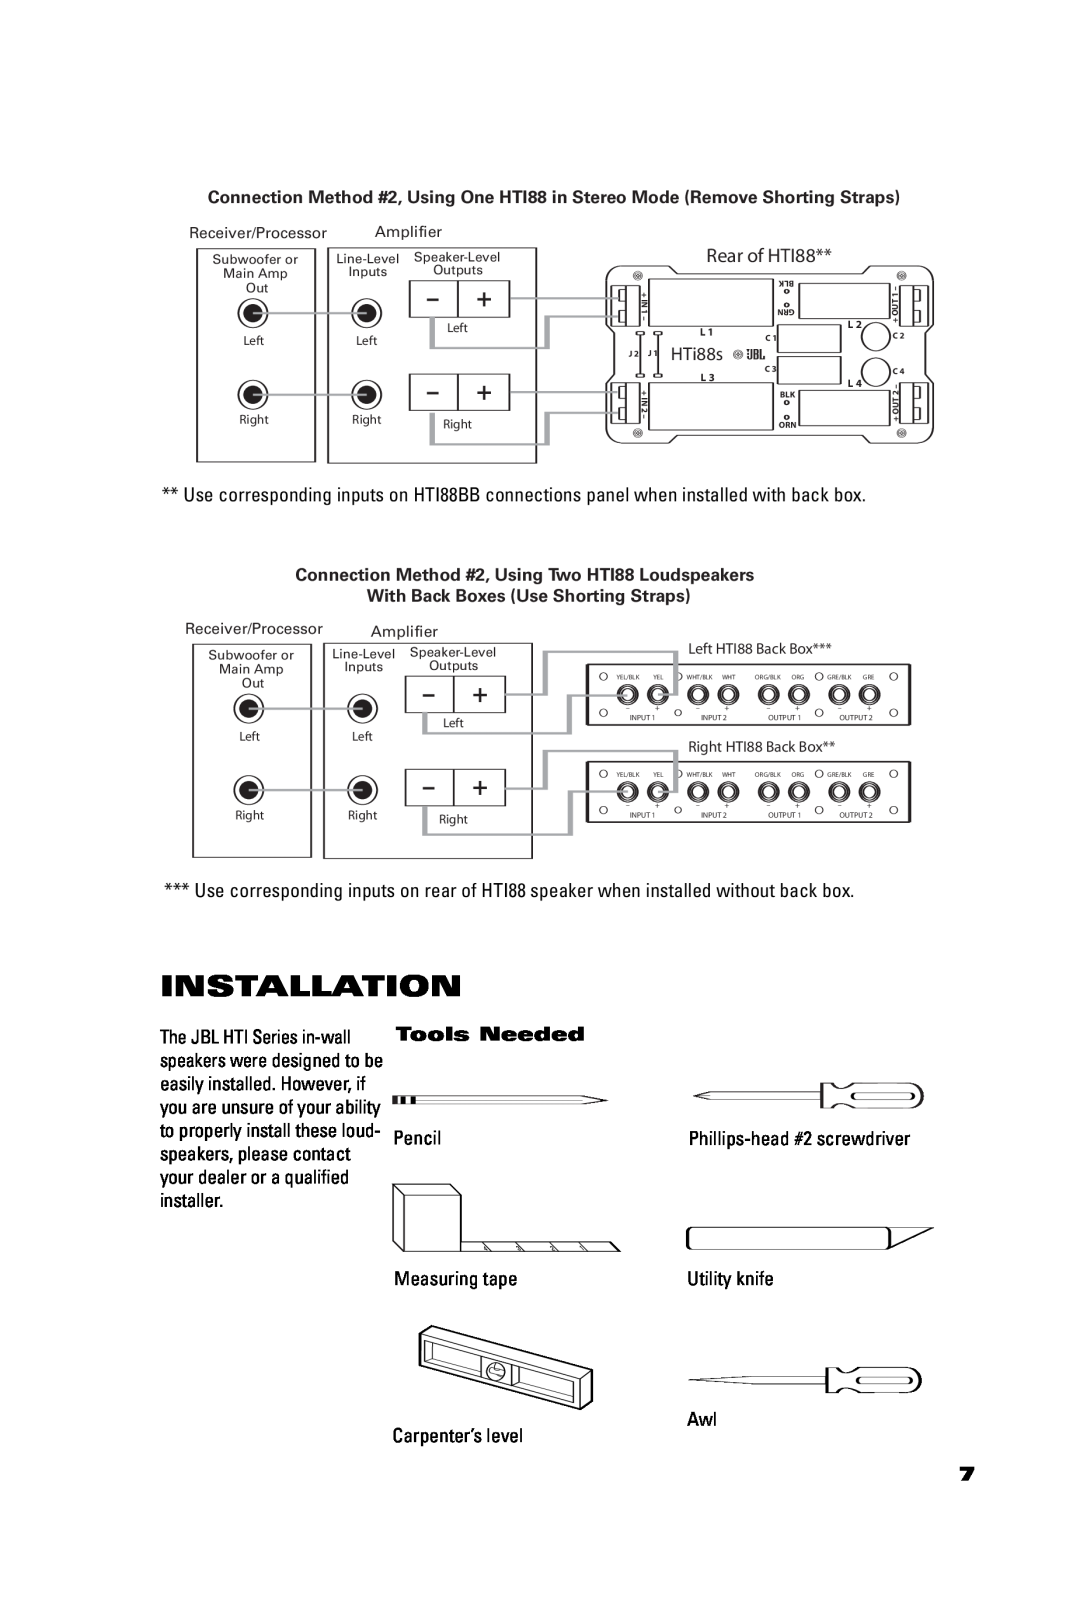 JBL manual Installation, Rear of HTI88, Tools Needed, Pencil, Measuring tape, Awl Carpenter’s level, HTi88s, Amplifier 